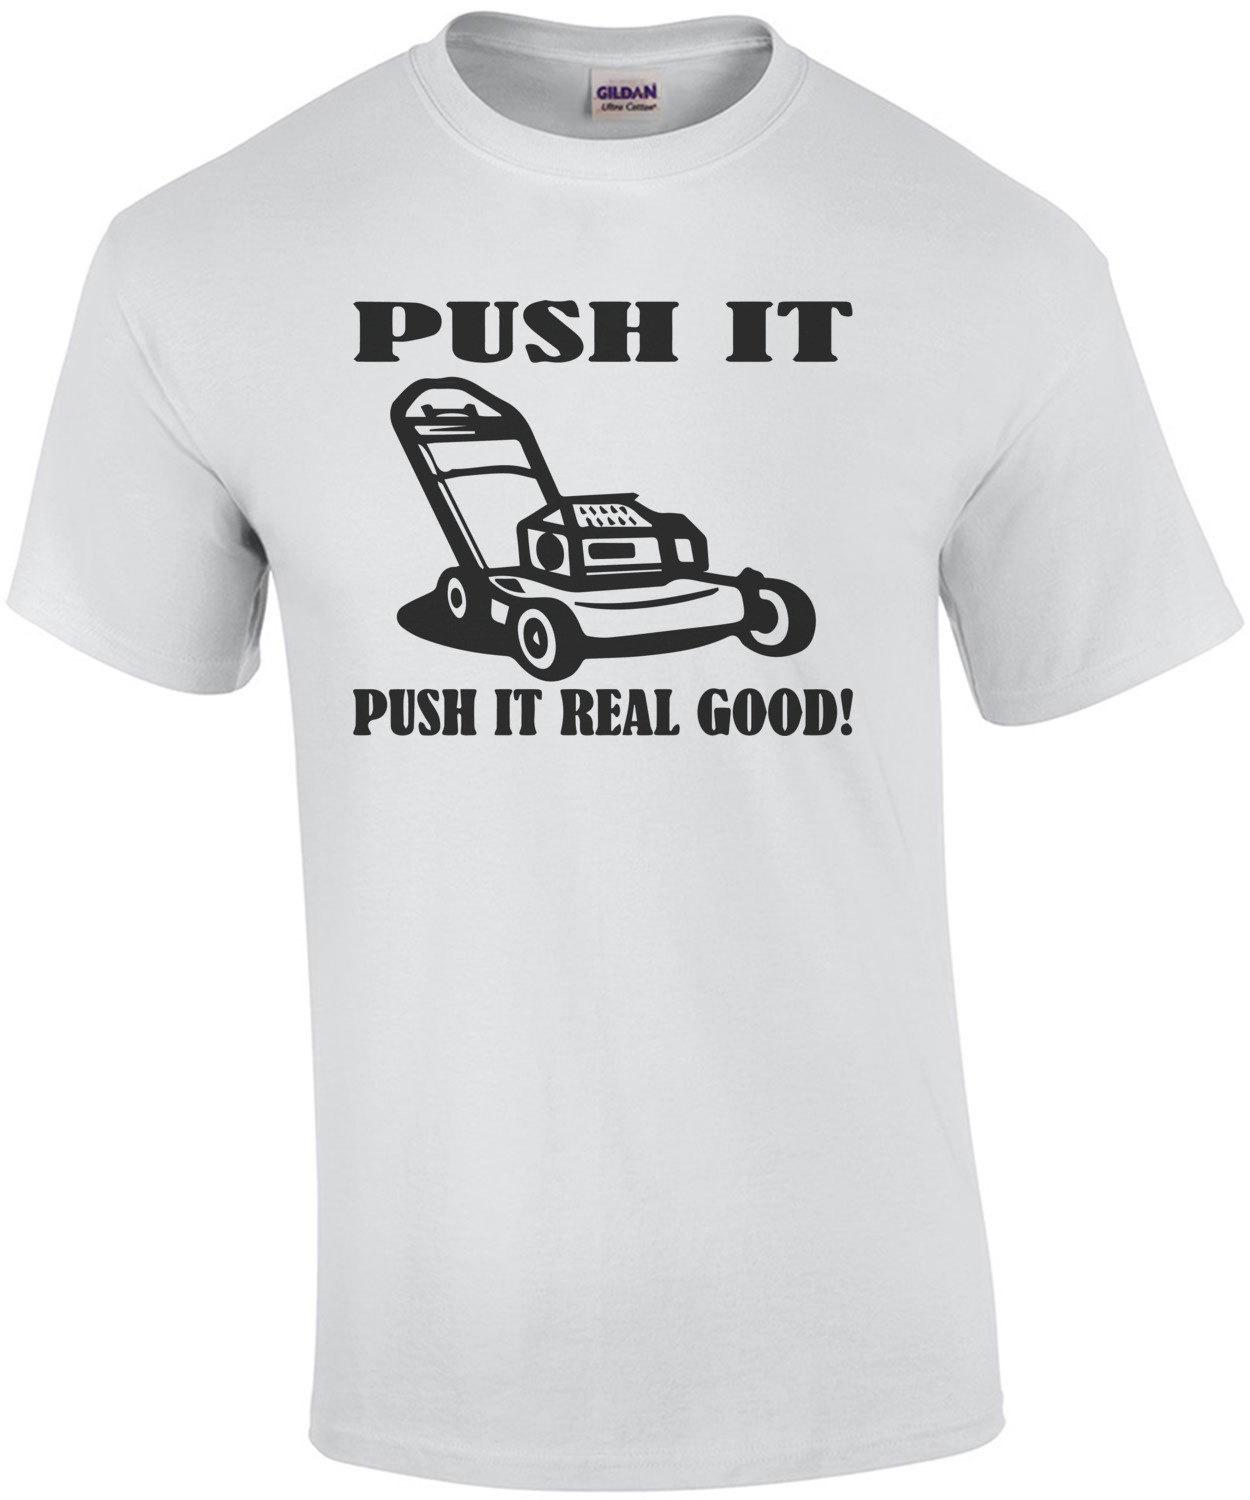 Push It - Push it real good. Salt-N-Pepa Parody